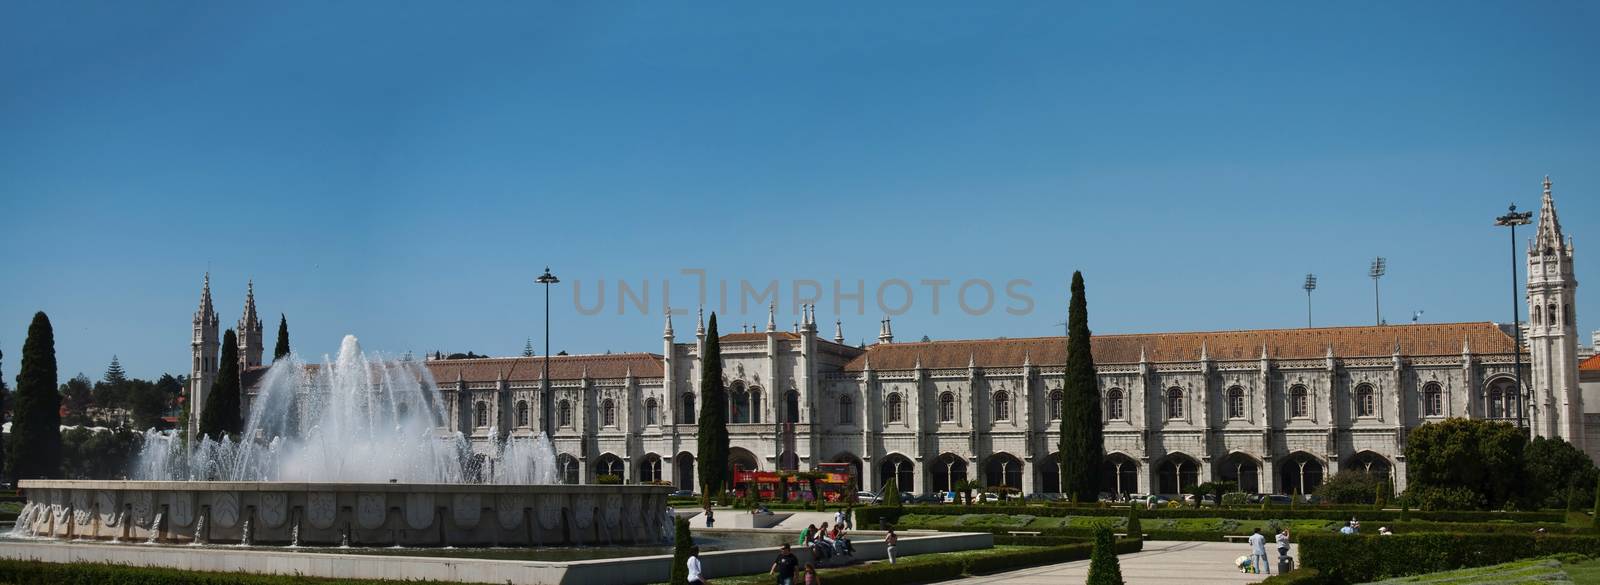 lisbon city portugal Jeronimos Monastery landmark architecture 04.10.2011